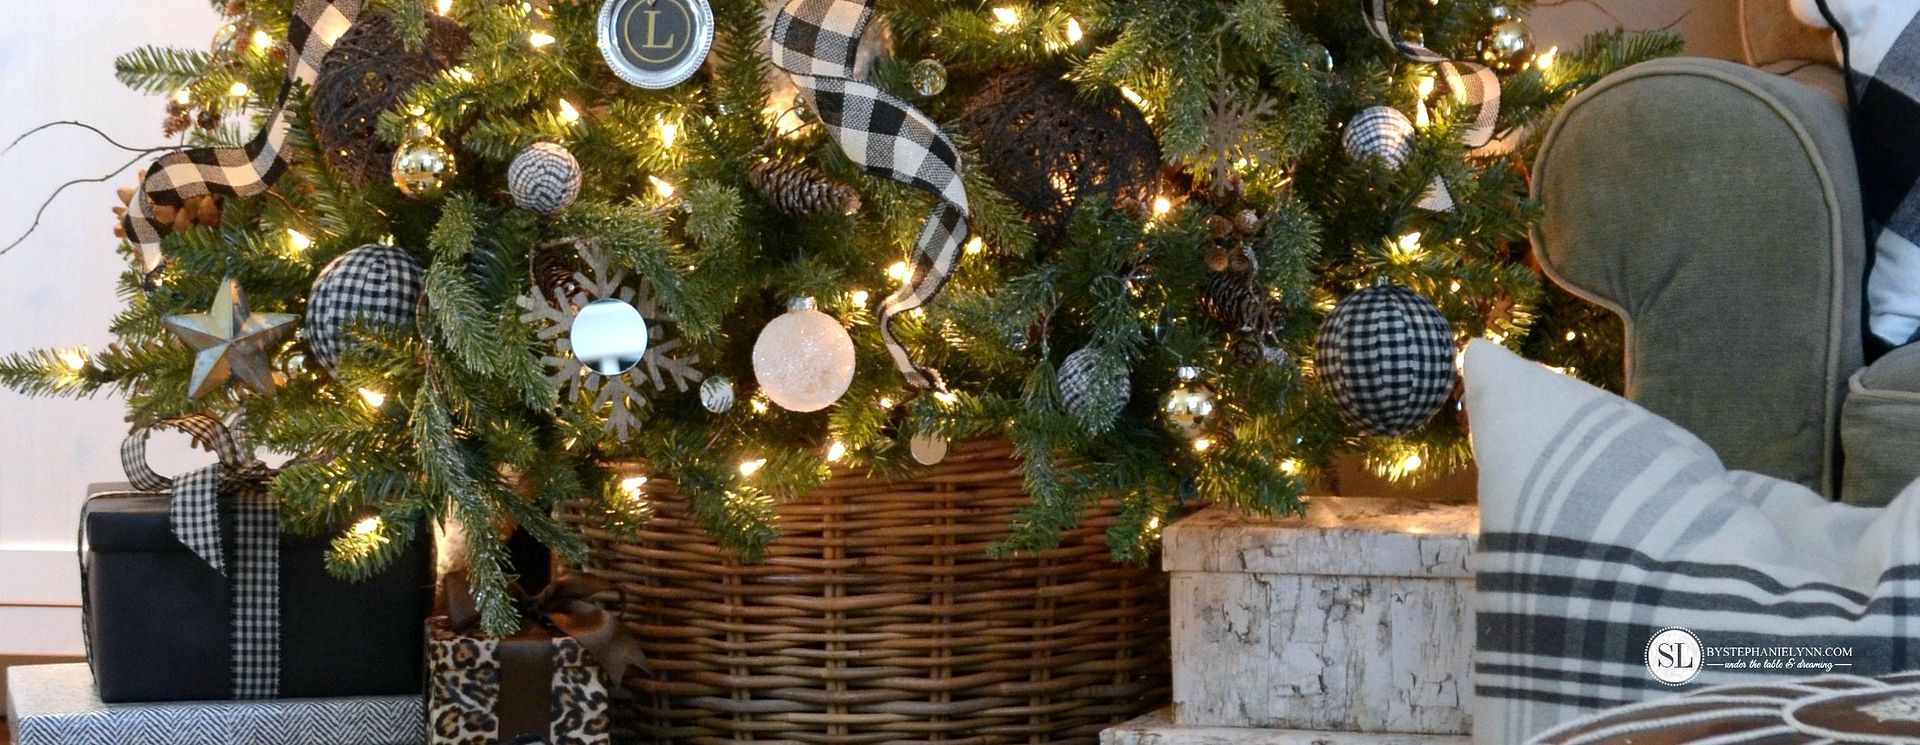 Black and White Plaid Buffalo Check Christmas Tree #michaelsmakers Dream Tree Challenge 